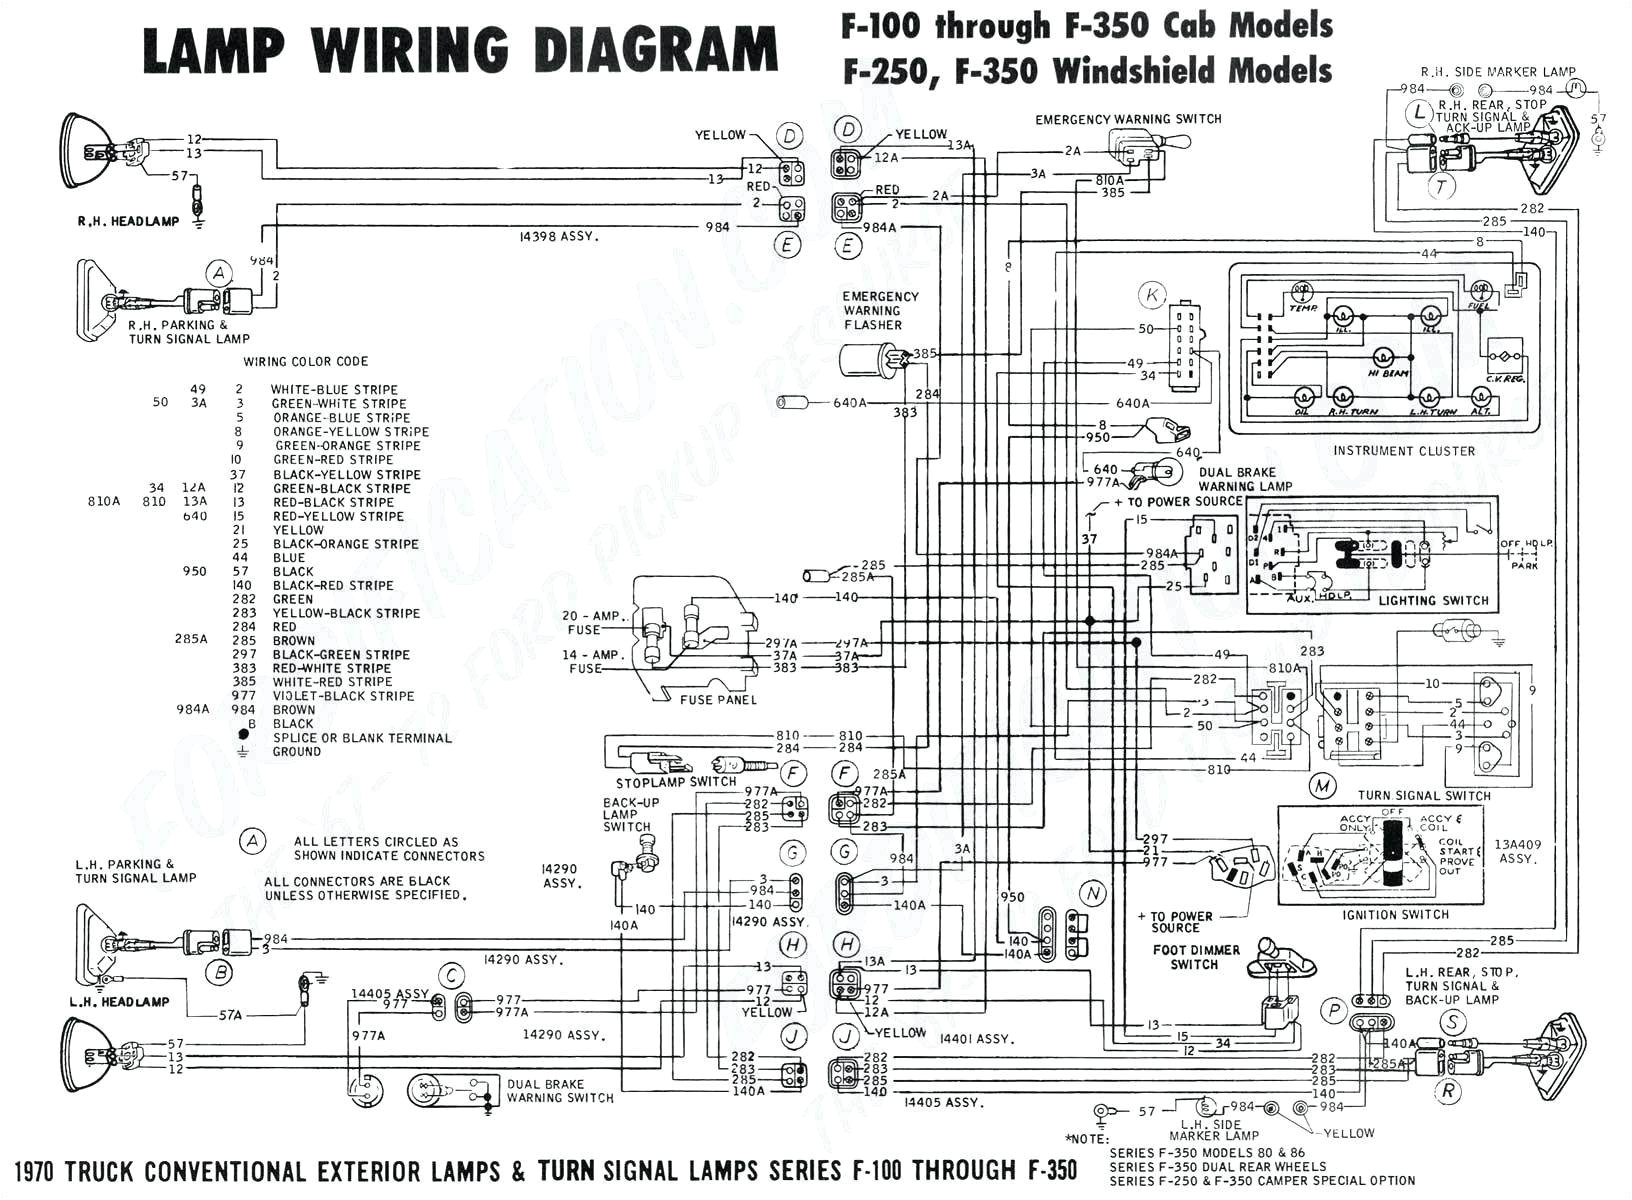 2001 toyota Corolla Wiring Diagram 2015 Corolla Wiring Diagram Wiring Diagram Blog